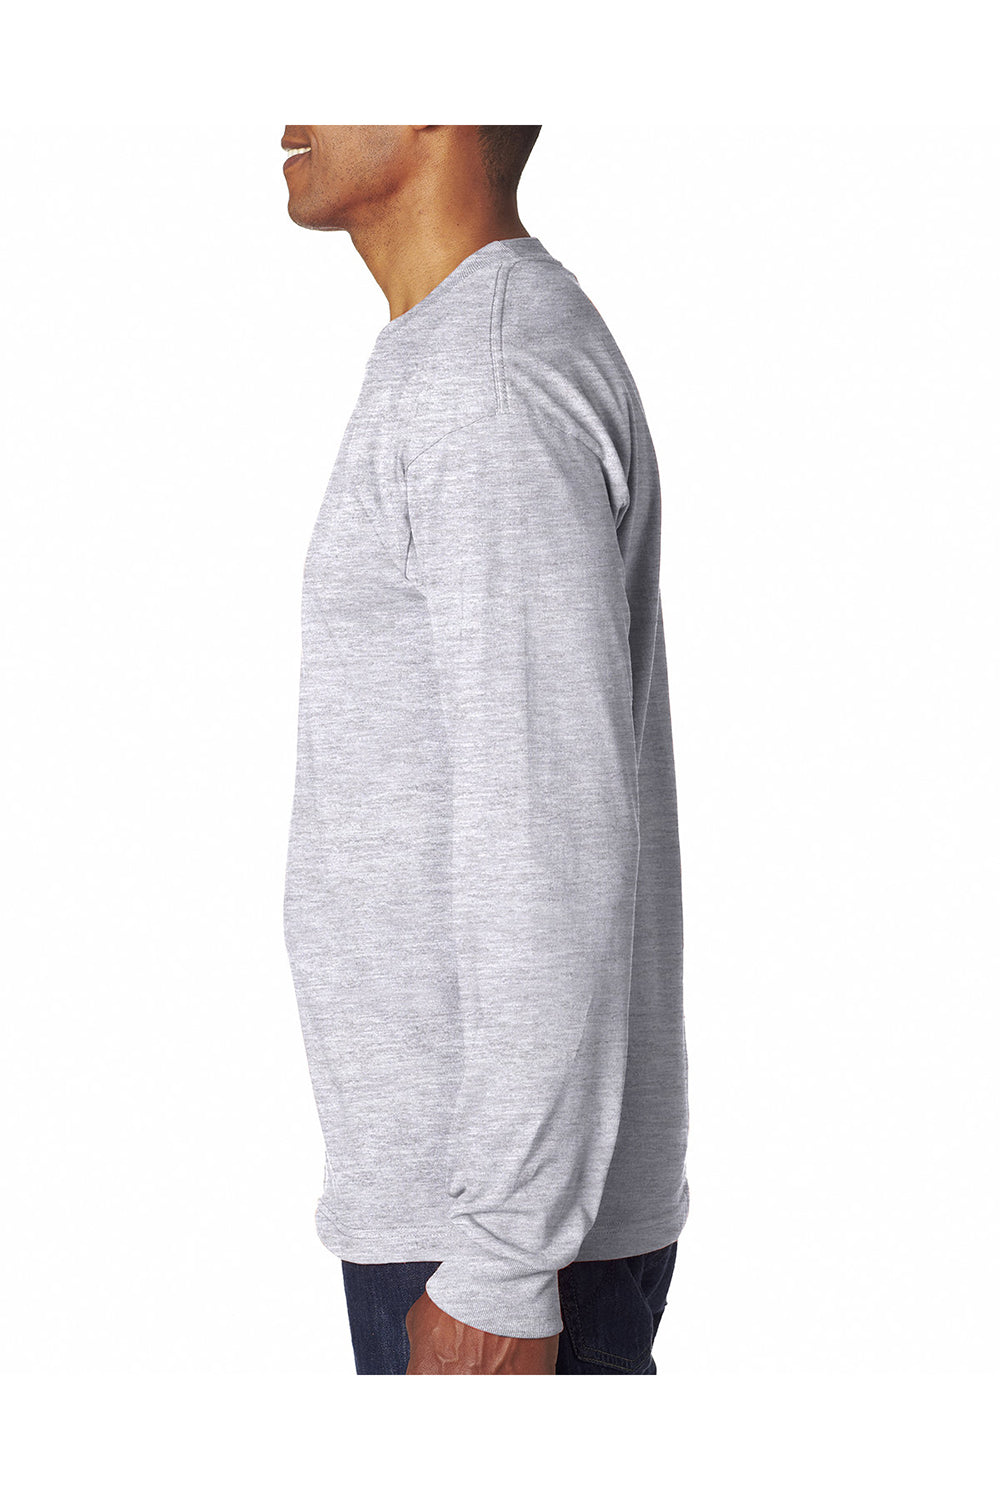 Bayside BA6100 Mens USA Made Long Sleeve Crewneck T-Shirt Ash Grey Model Side